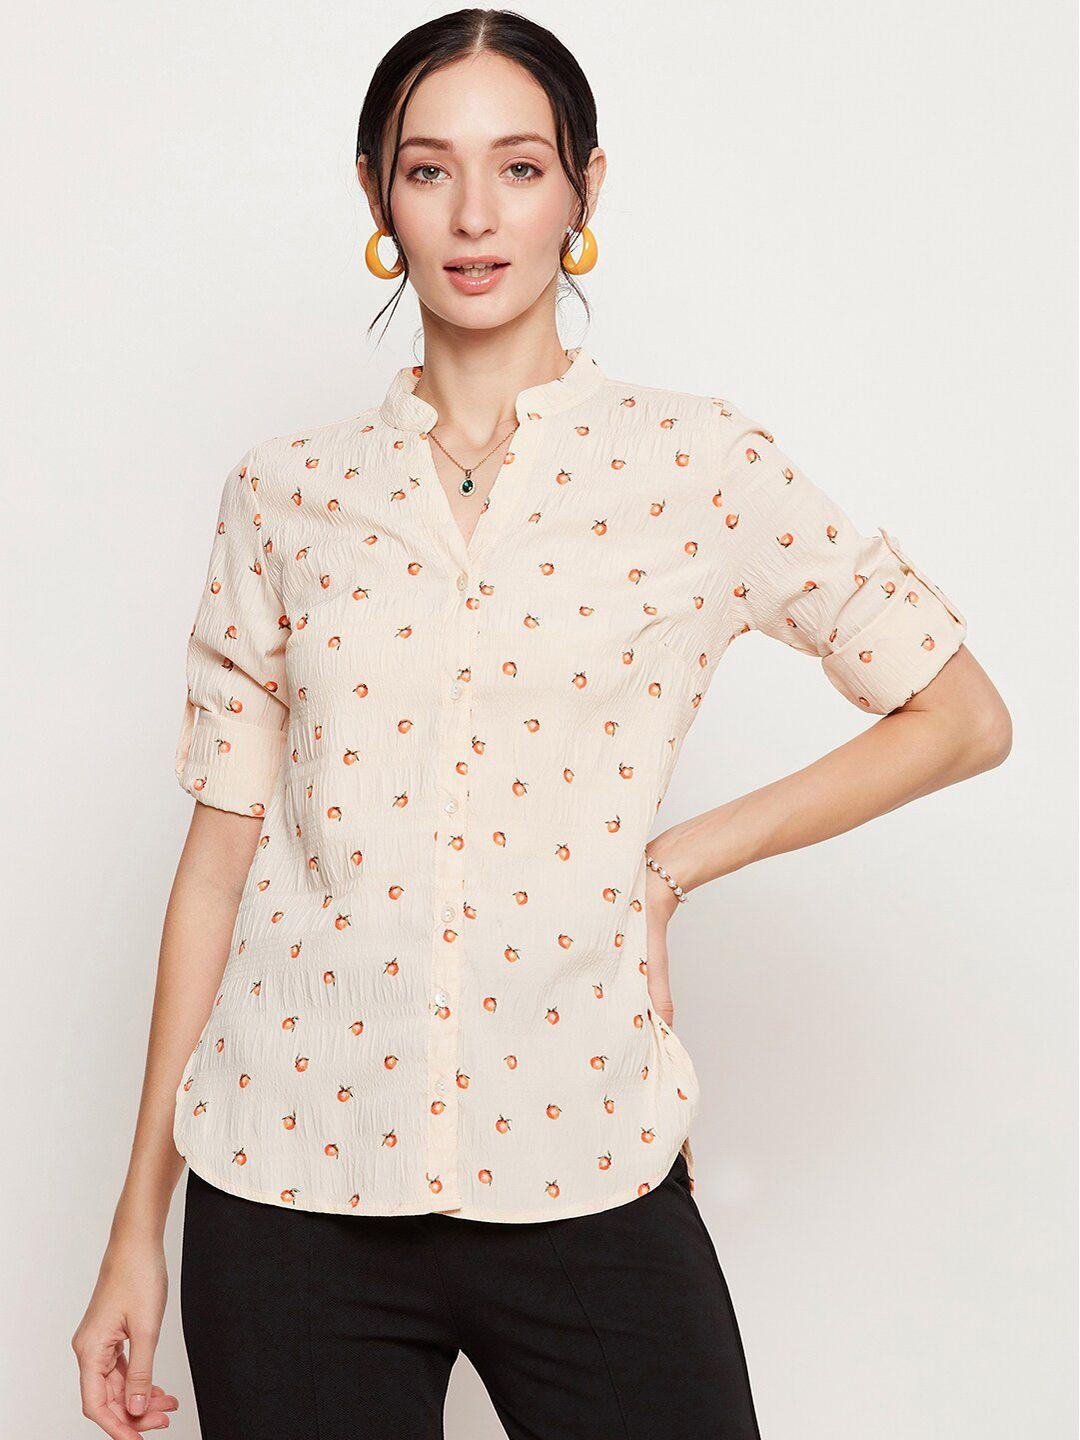 ruhaans conversational printed mandarin collar roll-up sleeves shirt style top